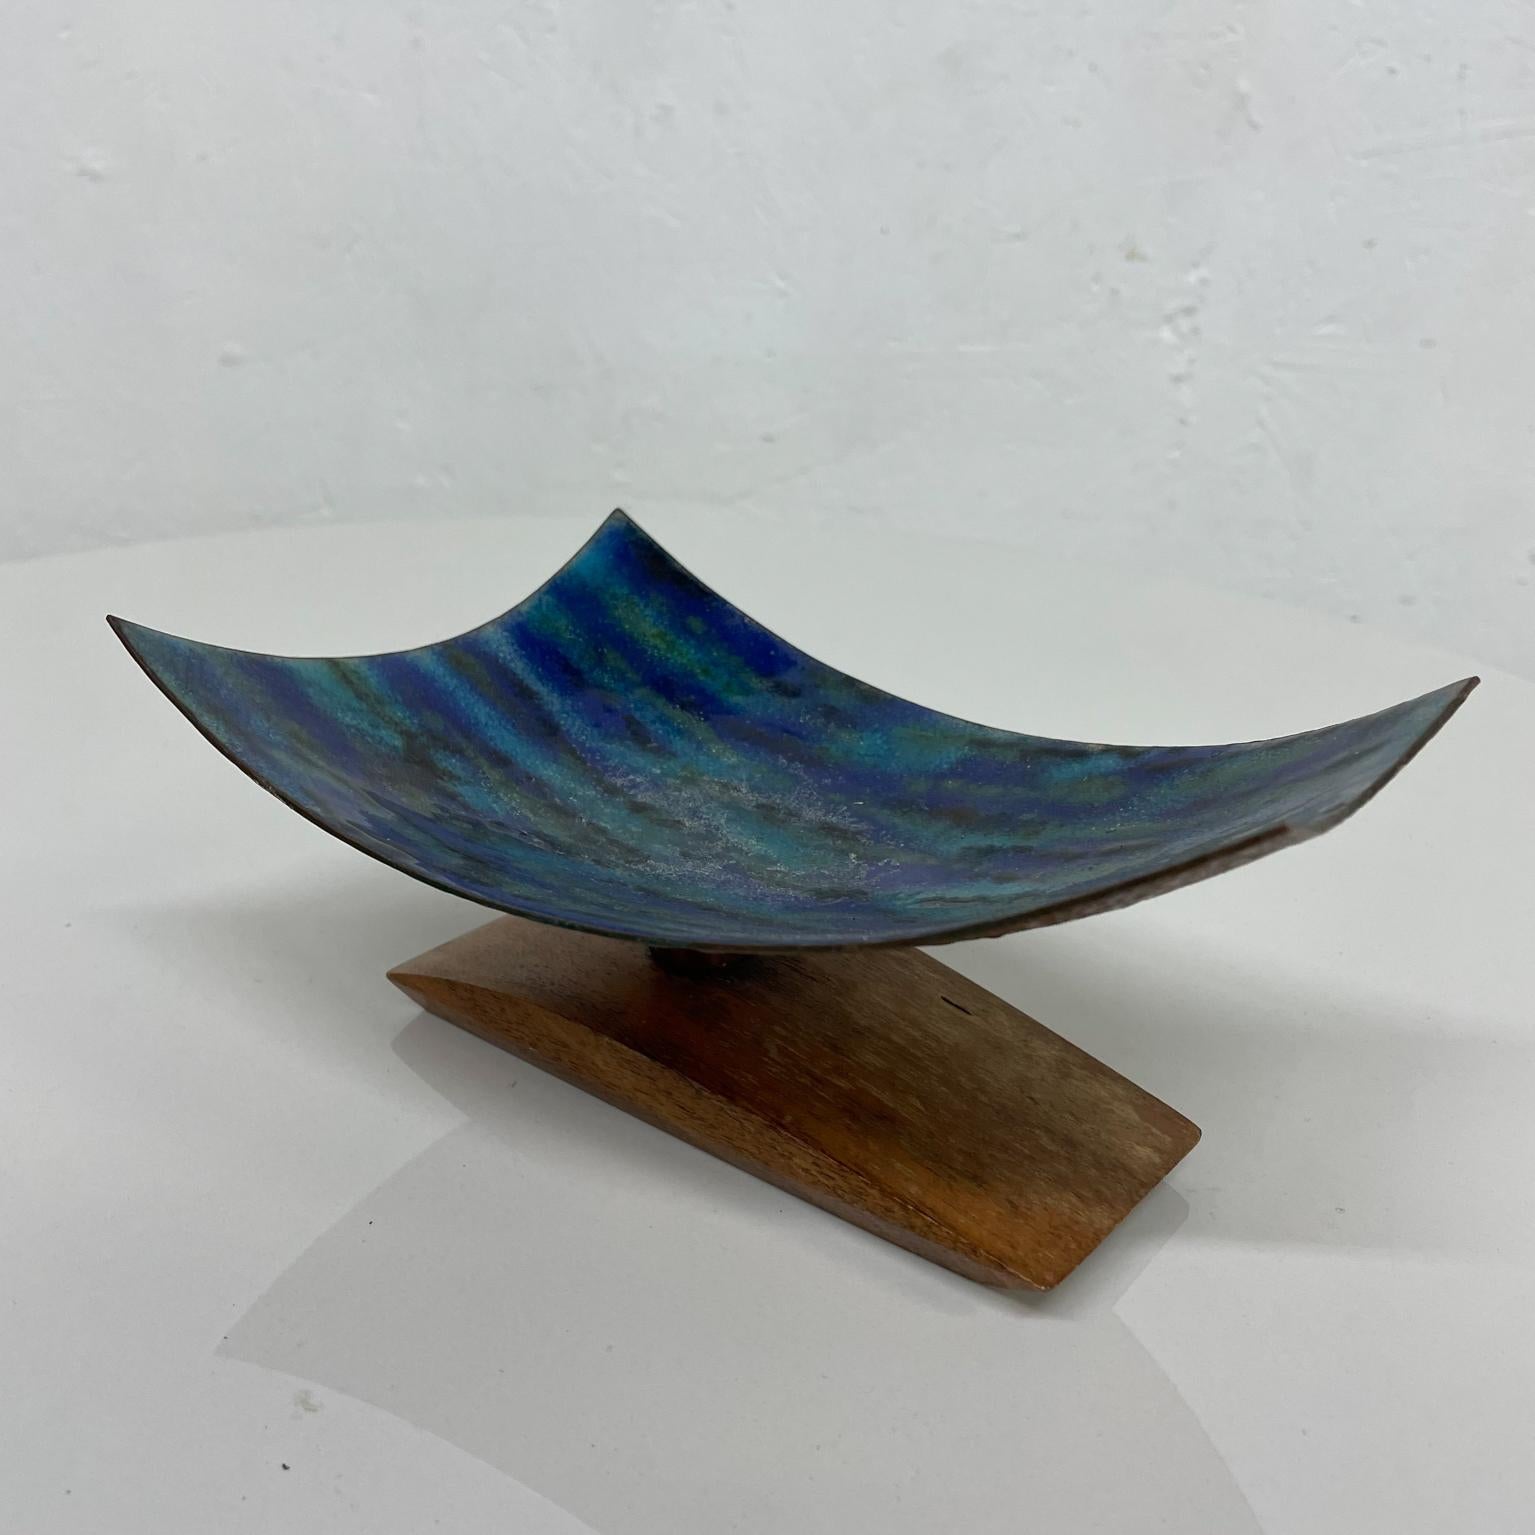 North American Modern Curved Lines Dreamy Blue Enamel Sculpture Koa Wood Base 1980s For Sale